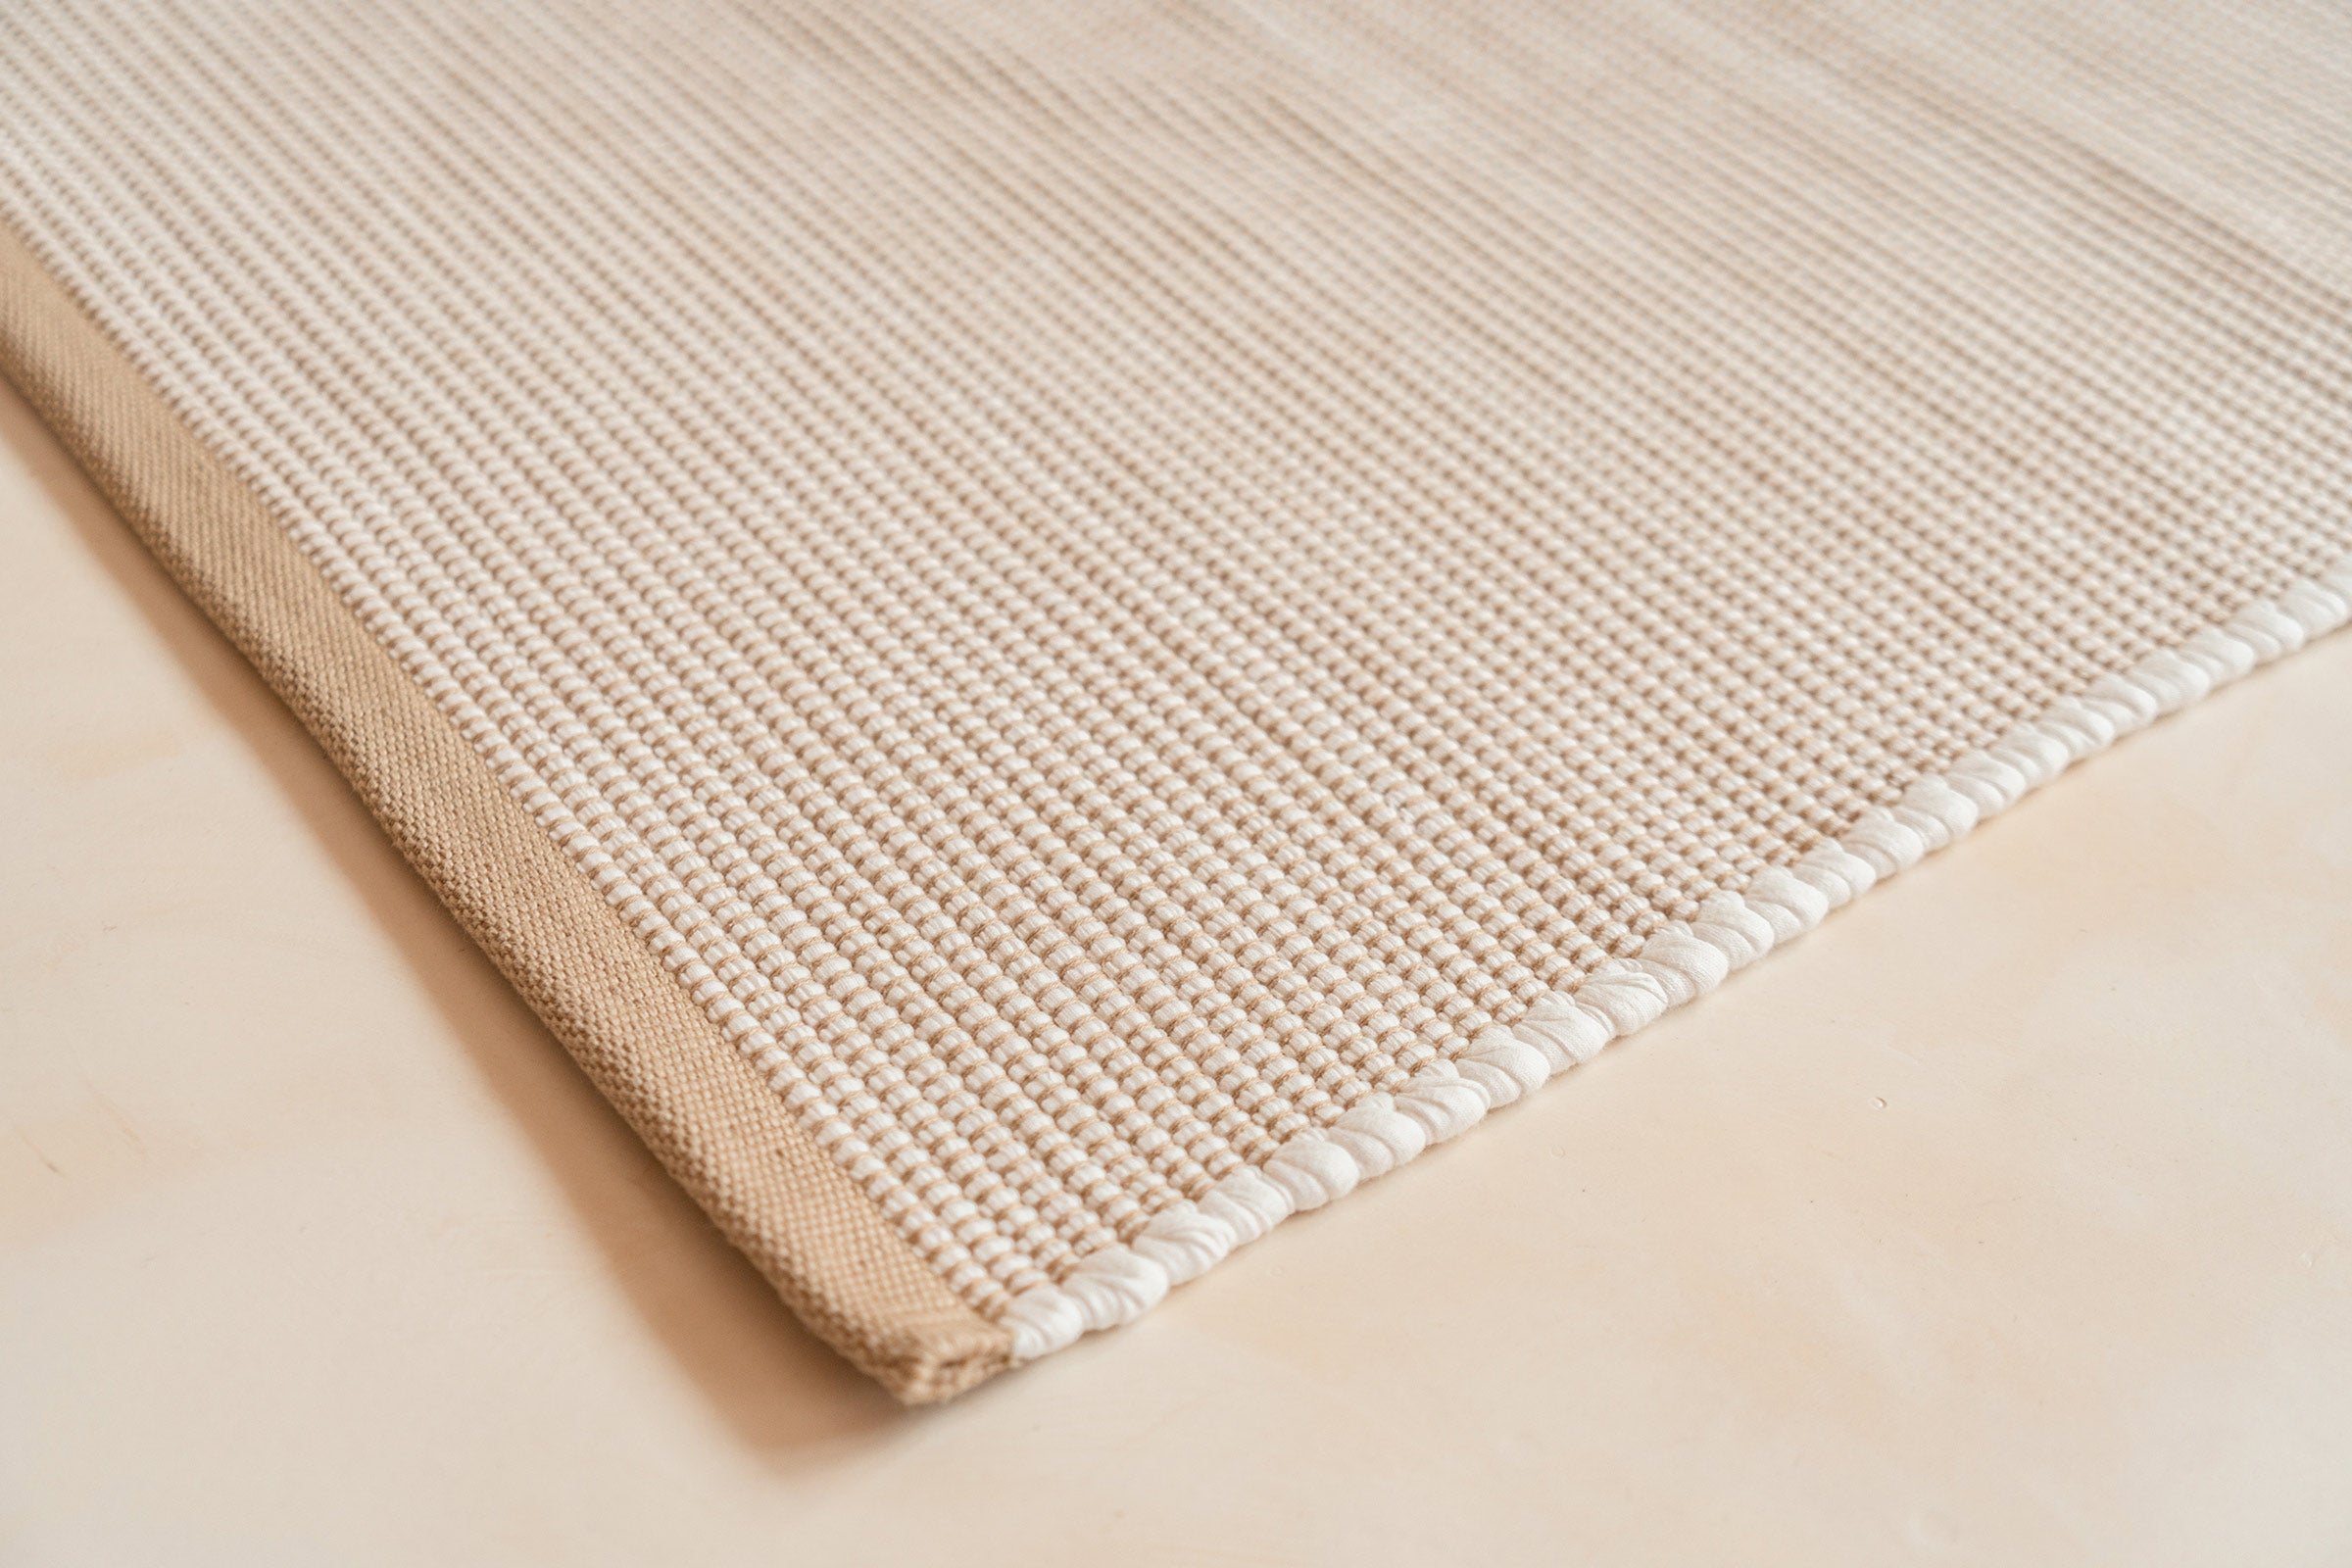 cotton-floor-mats-closed-up-shot-by-sojao.jpg